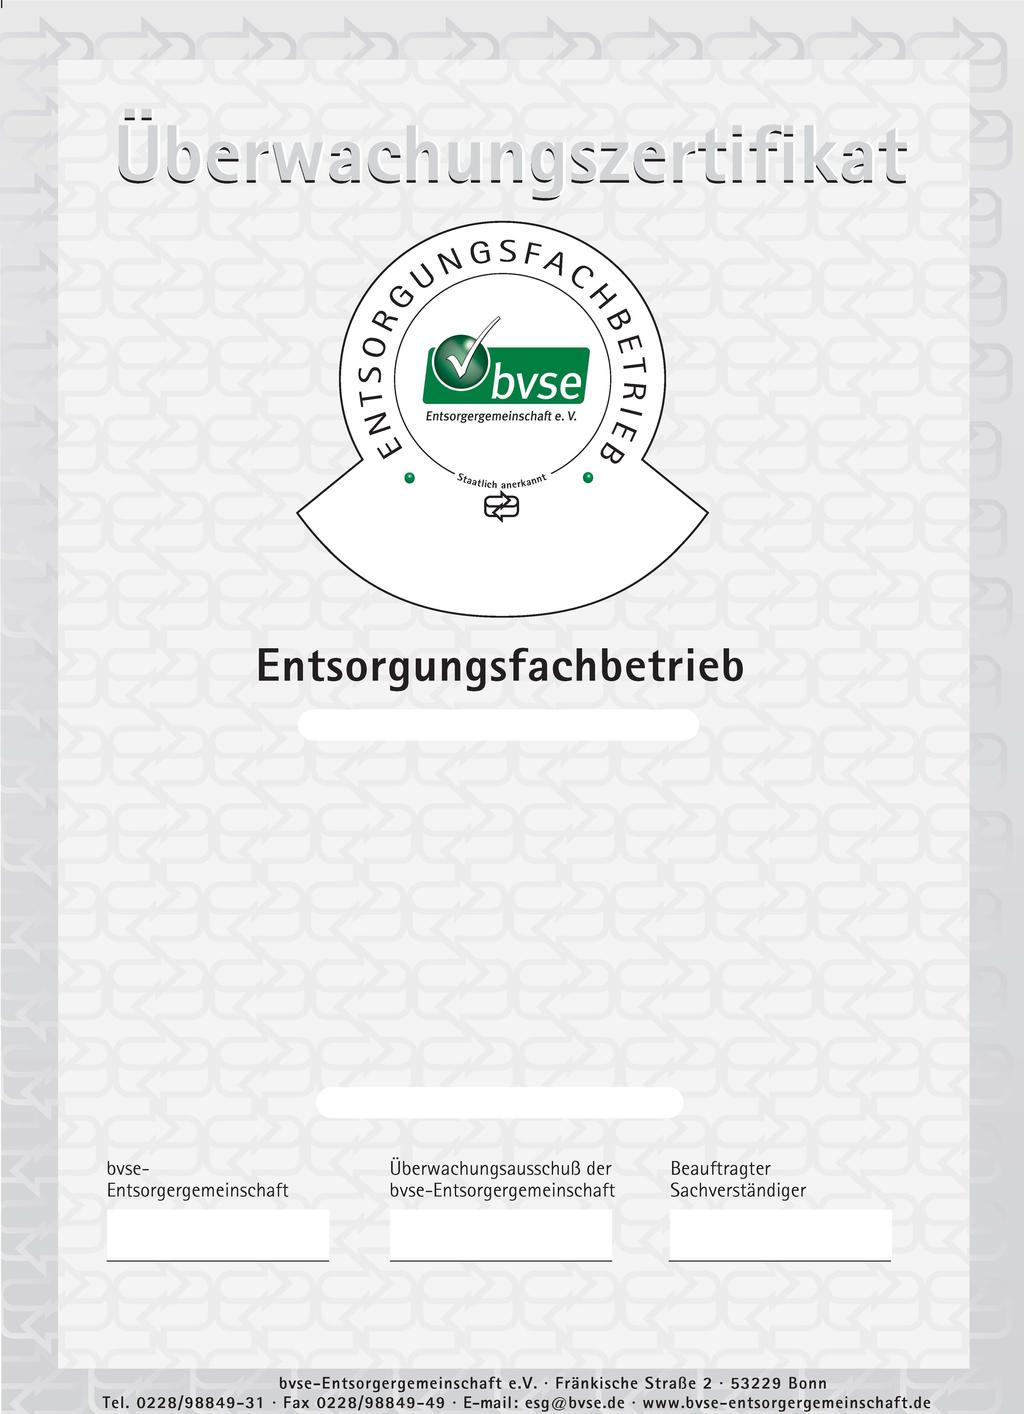 Überwachungszertifikat-Nr.: 10408 GmbH Bonn, 30.